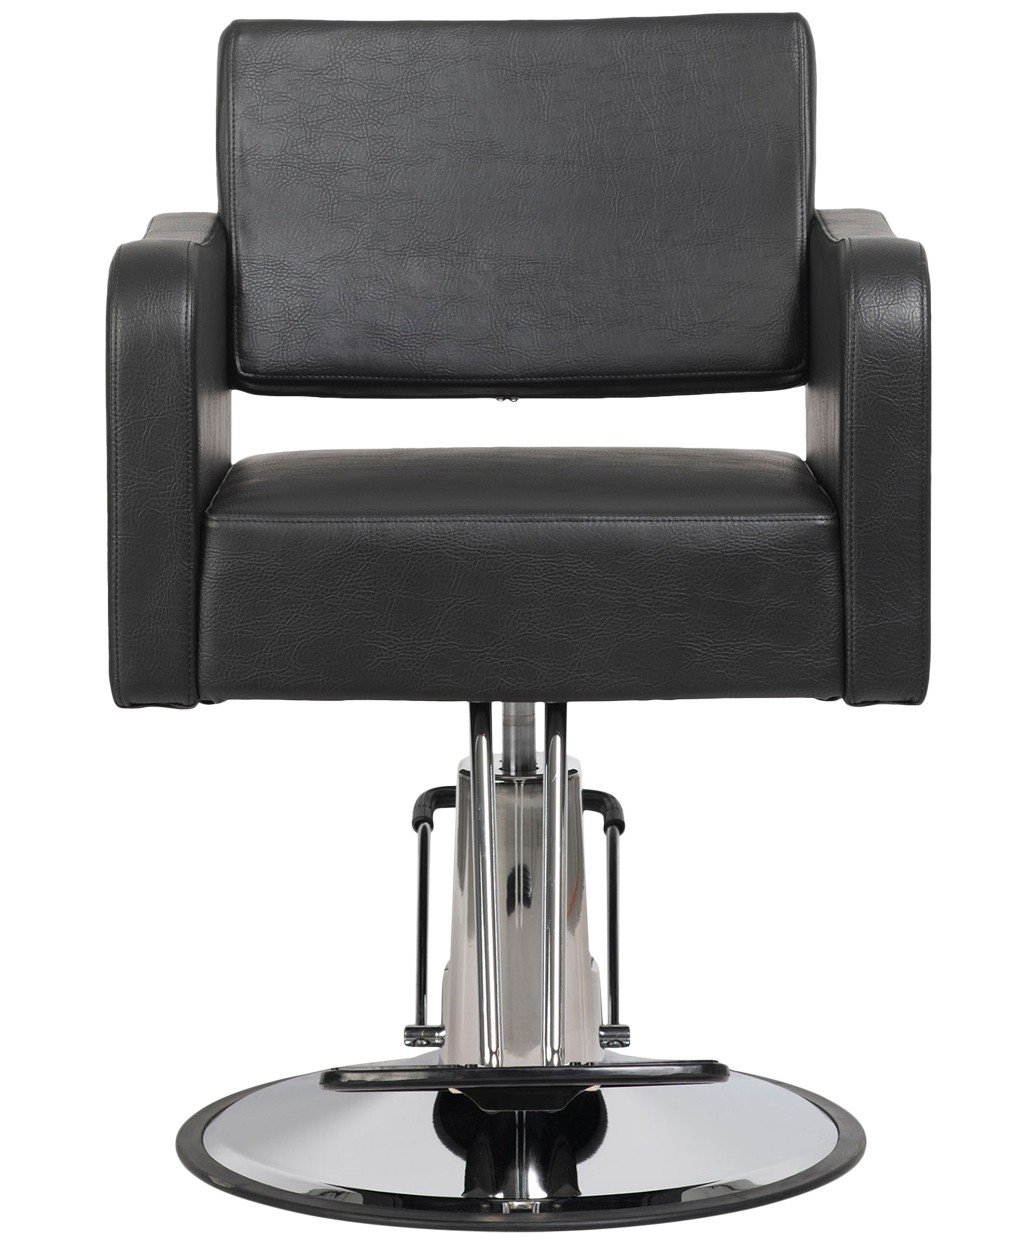 Lexus Styling Chair